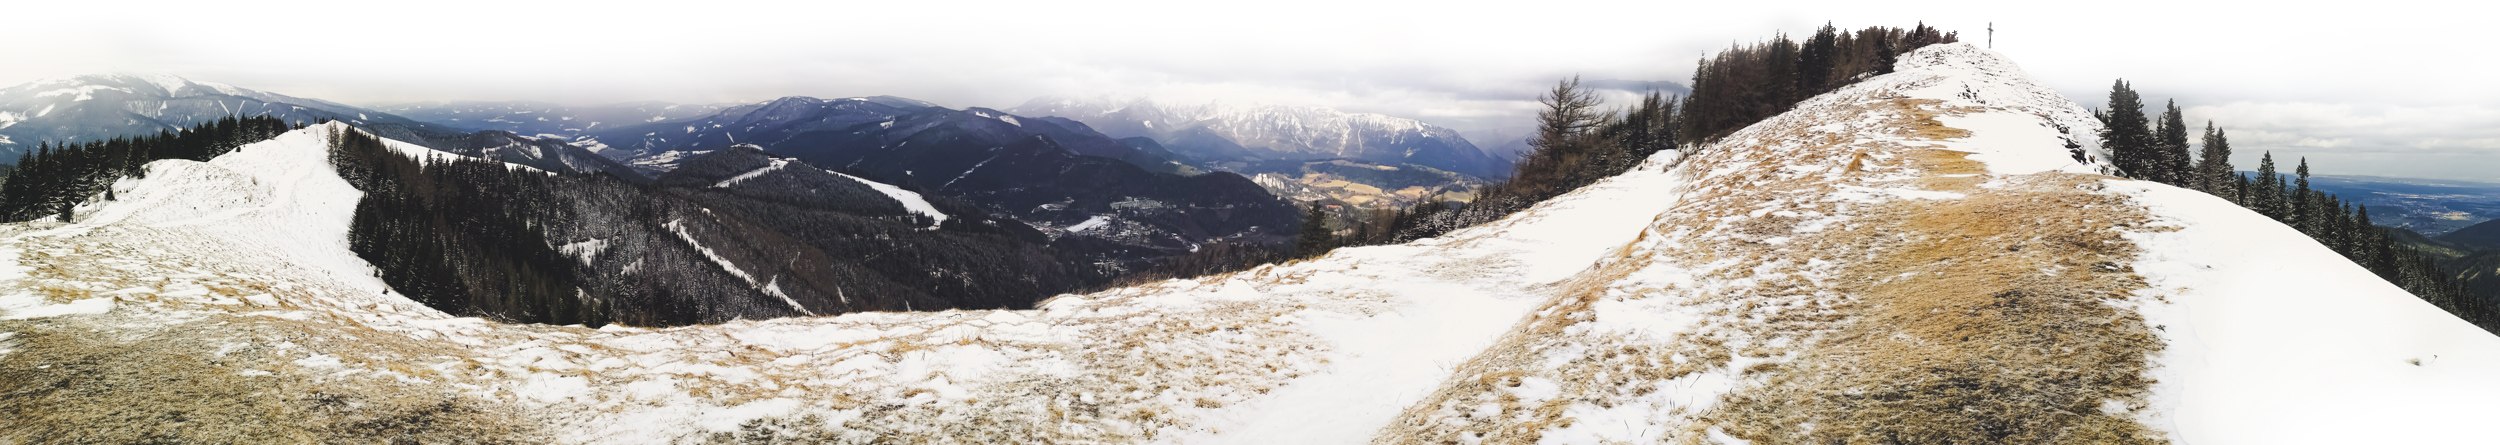 Hiking from Erzkogel and Sonnwendstein to Zauberberg Semmering in winter, Lower Austria